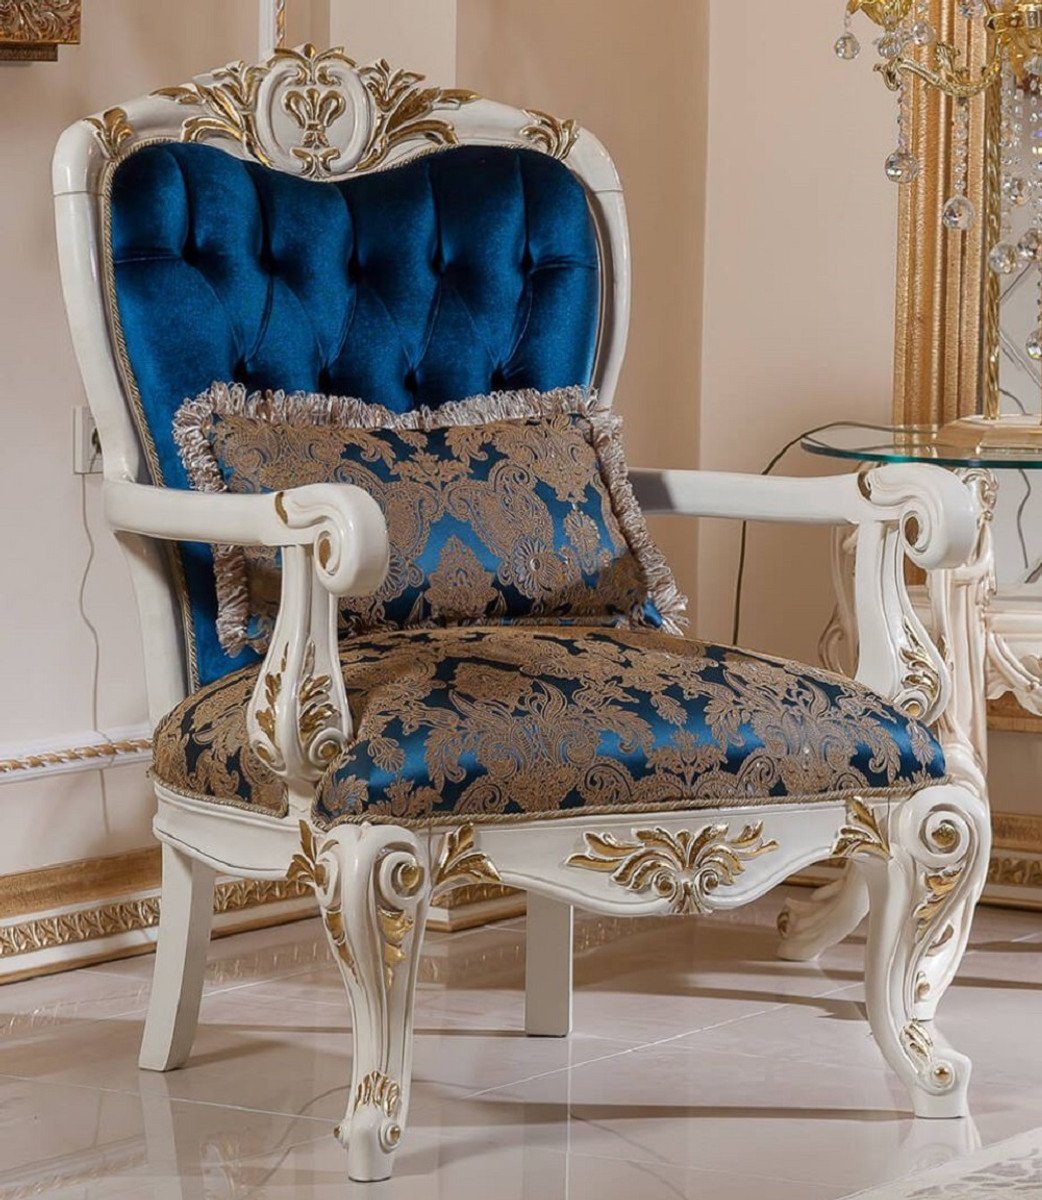 Casa Padrino Sessel Casa Padrino Luxus Barock Sessel Blau / Braun / Weiß / Gold - Prunkvoller Wohnzimmer Sessel mit elegantem Muster - Barockstil Wohnzimmer Möbel - Luxus Möbel im Barockstil - Barock Einrichtung